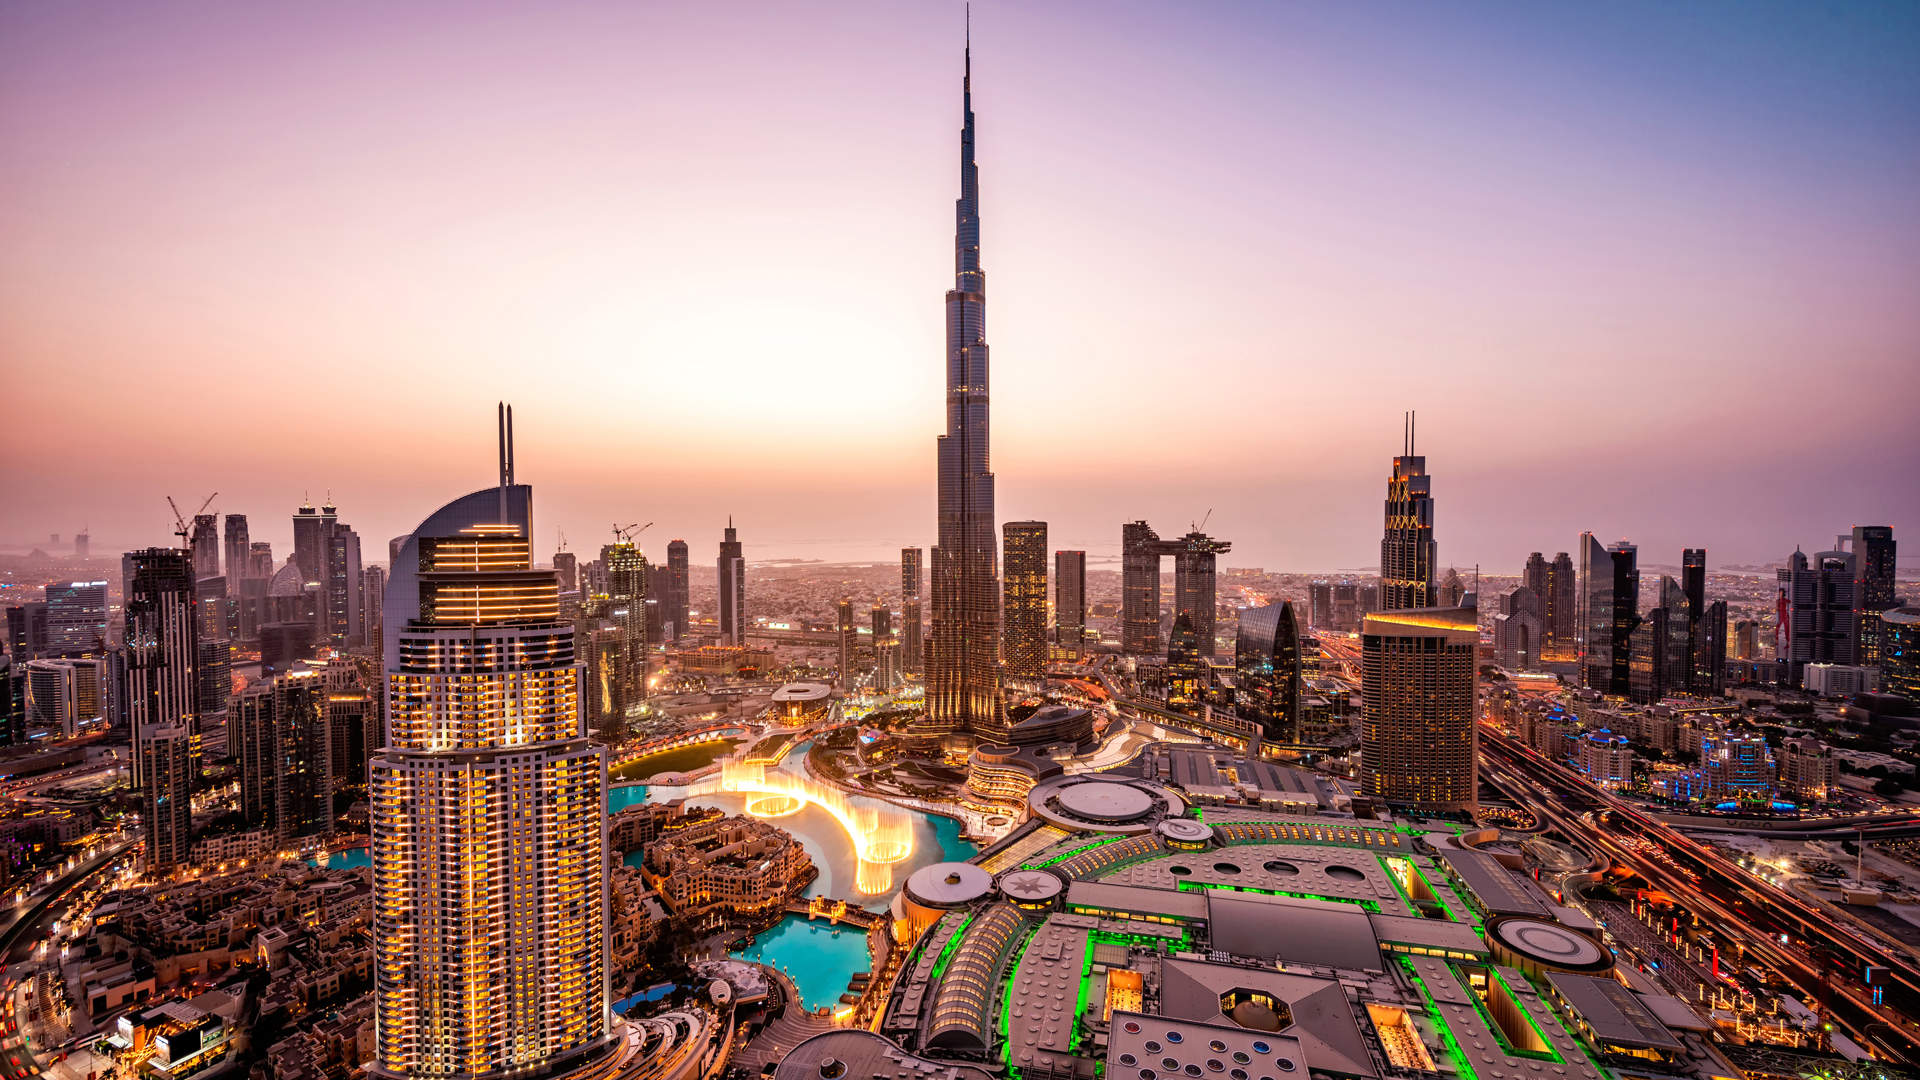 Cityscape Of Downtown Dubai With Burj Khalifa